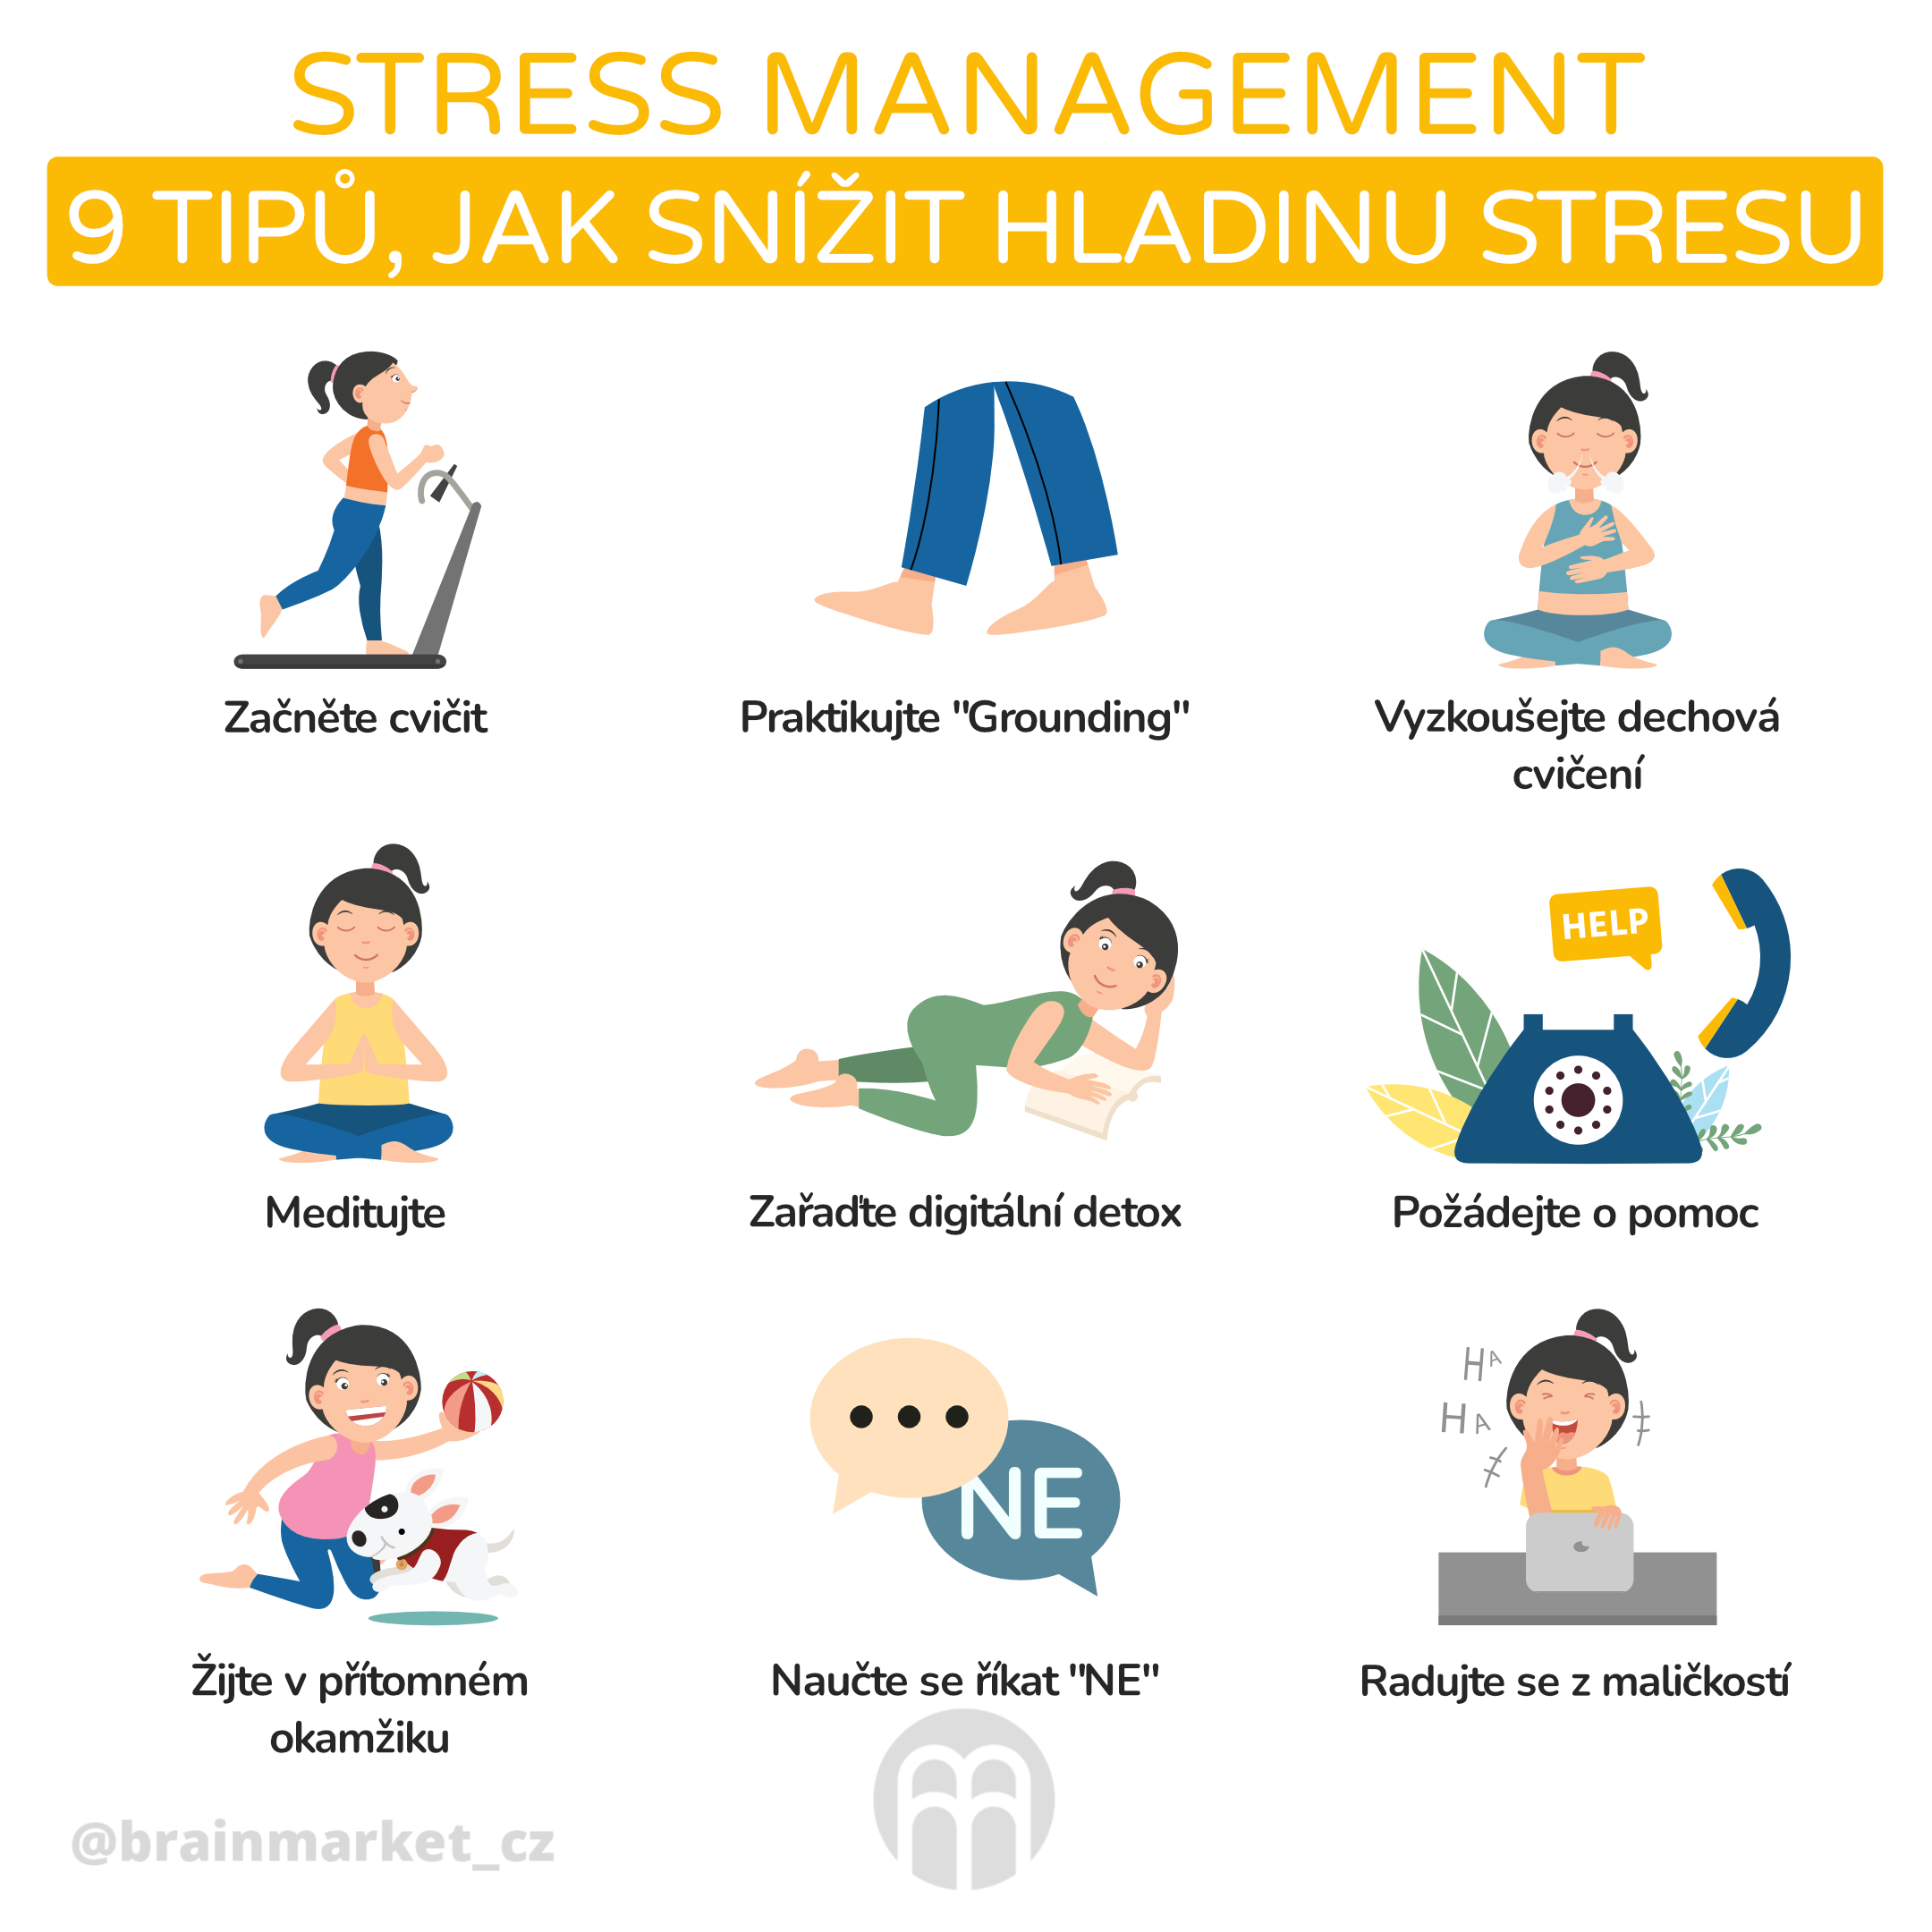 Co uvolňuje stres?